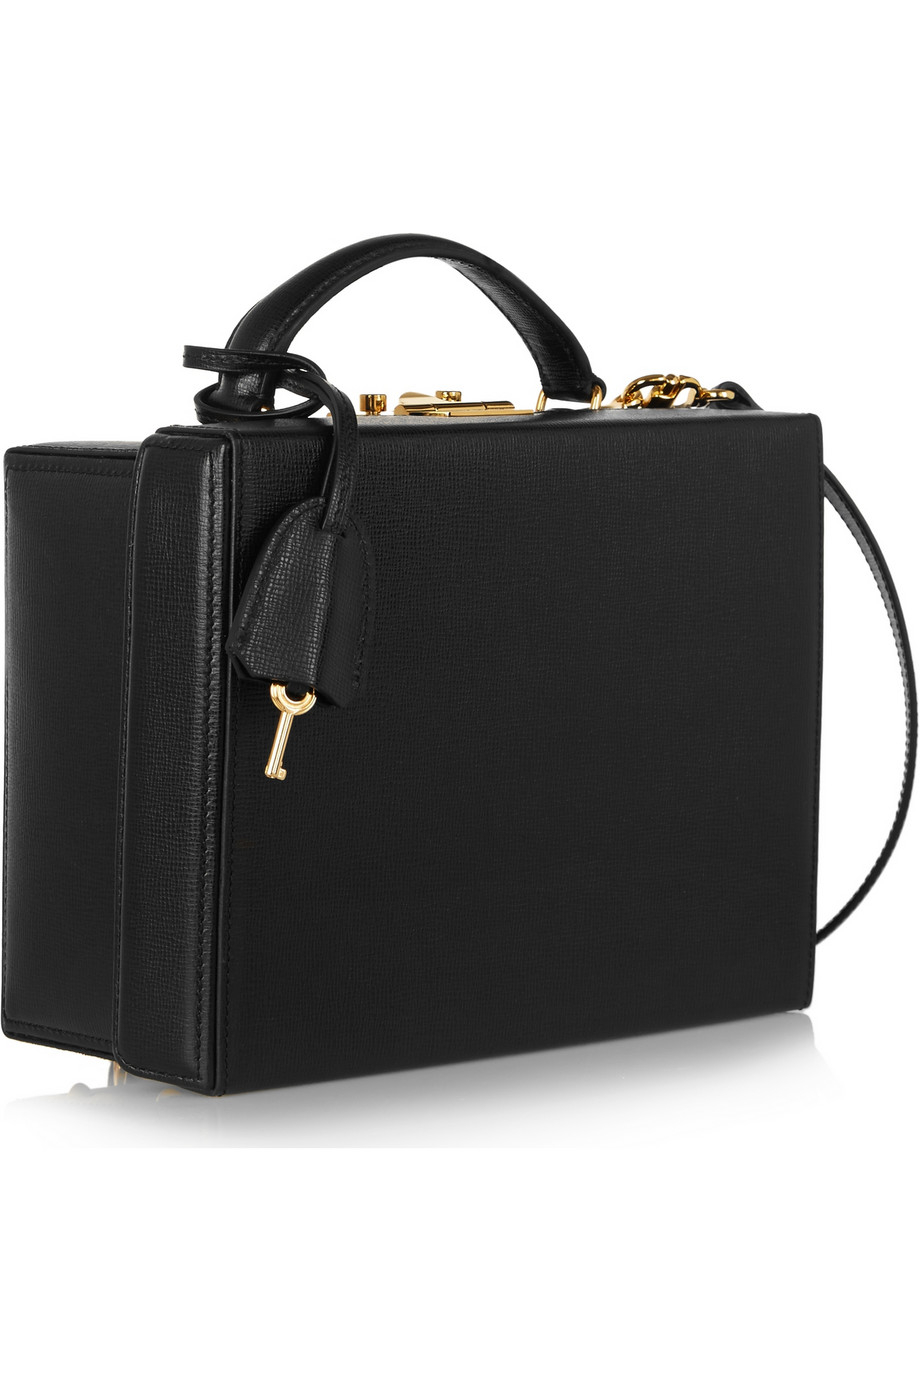 Lyst - Mark Cross Grace Textured-Leather Box Shoulder Bag in Black